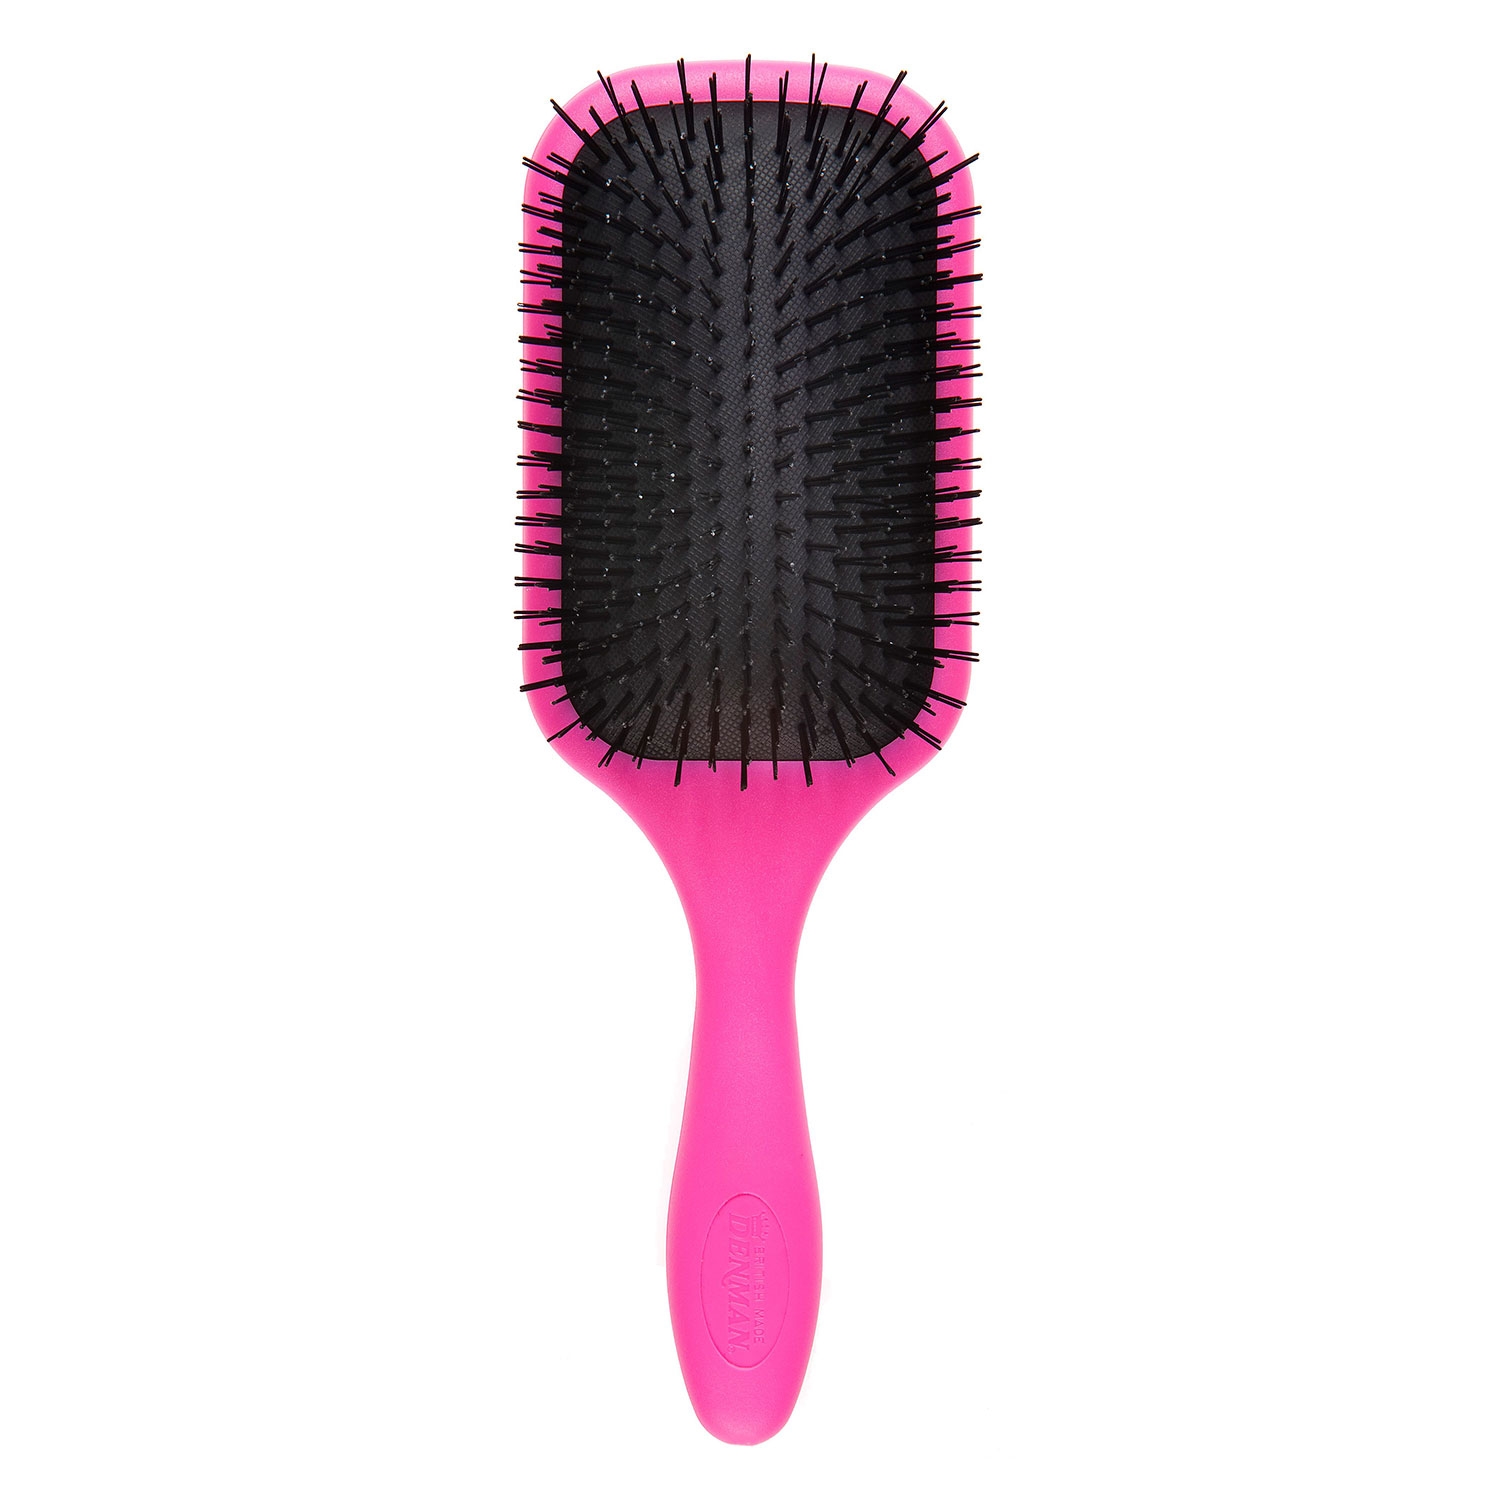 Produktbild von Tangle Tamer - Detangling-Brush pink